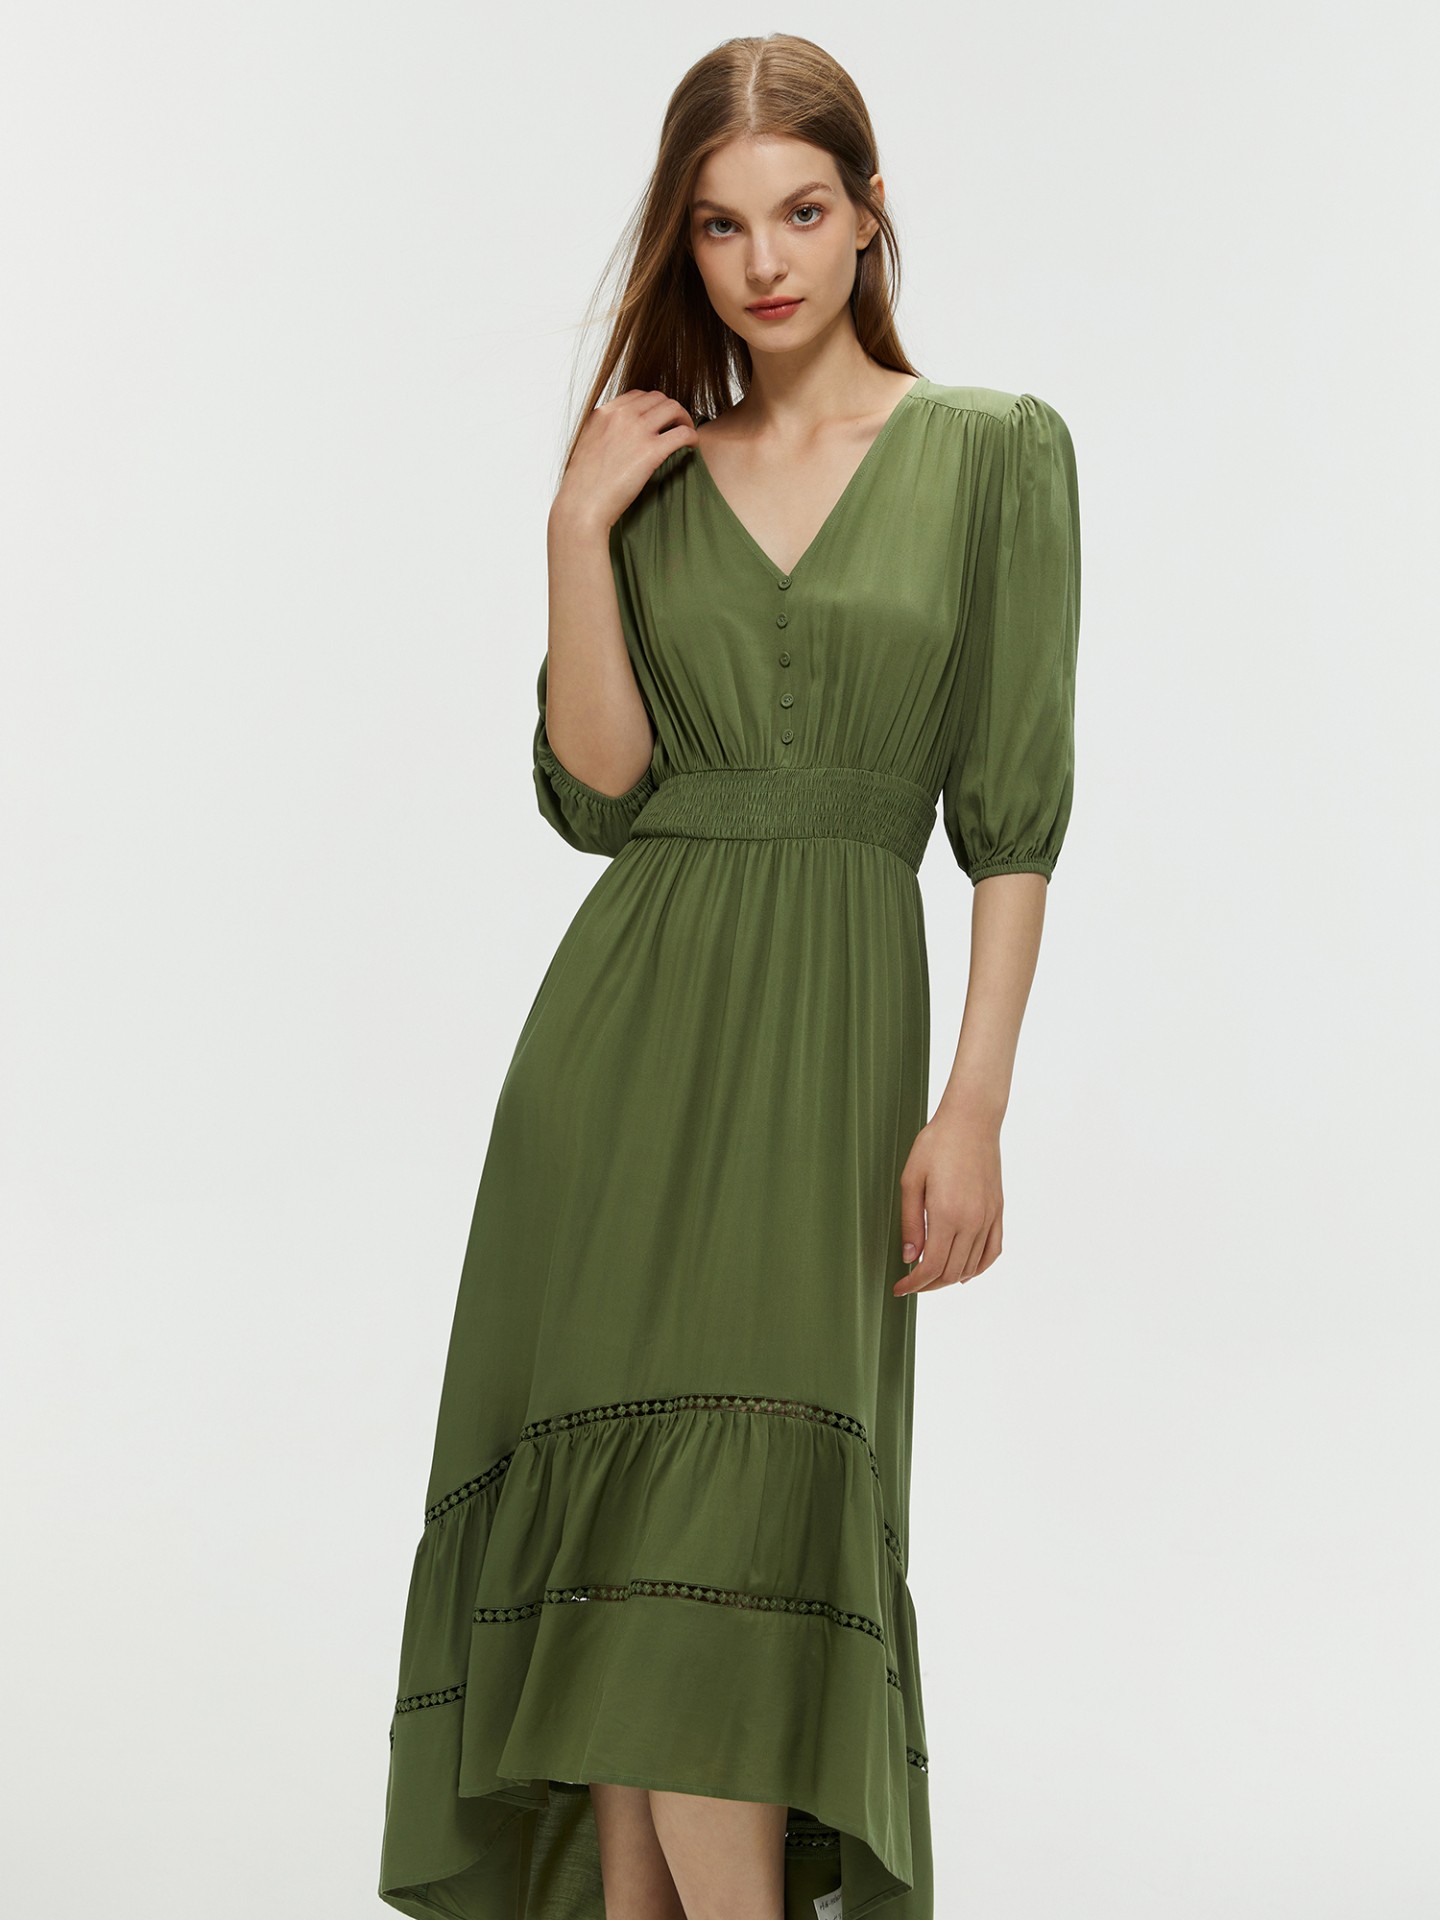 Lace Trim Green Floral Long Sleeve Midi Dress